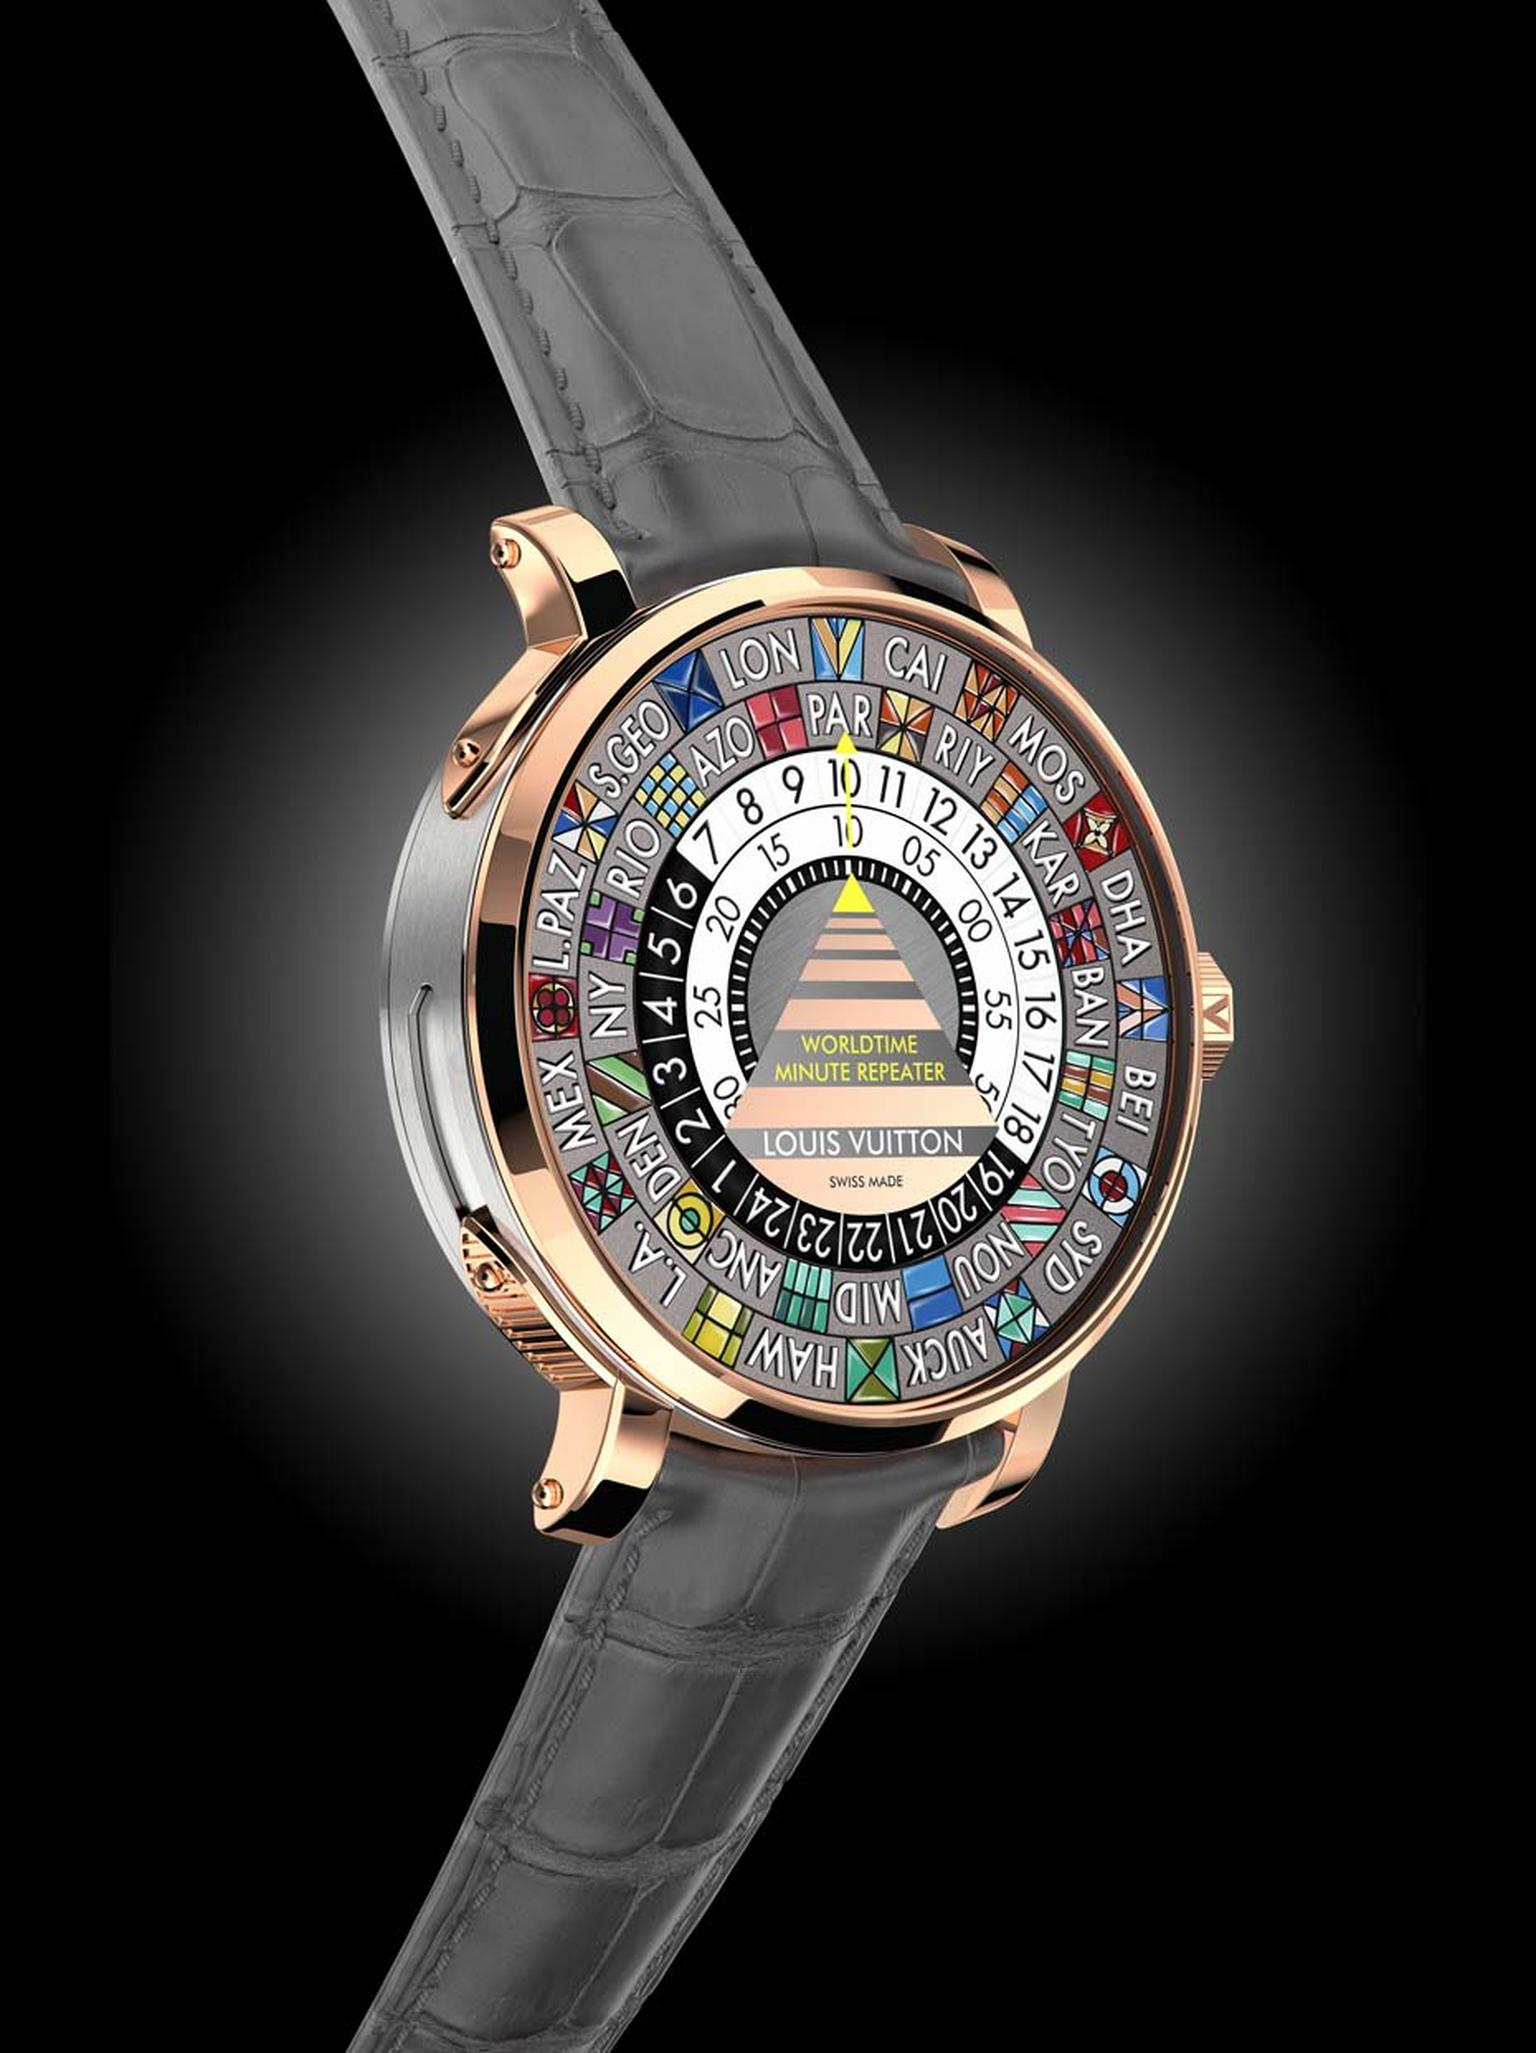 Louis Vuitton_Escale Worldtime Minute Repeater_watch side black bground 2.jpg